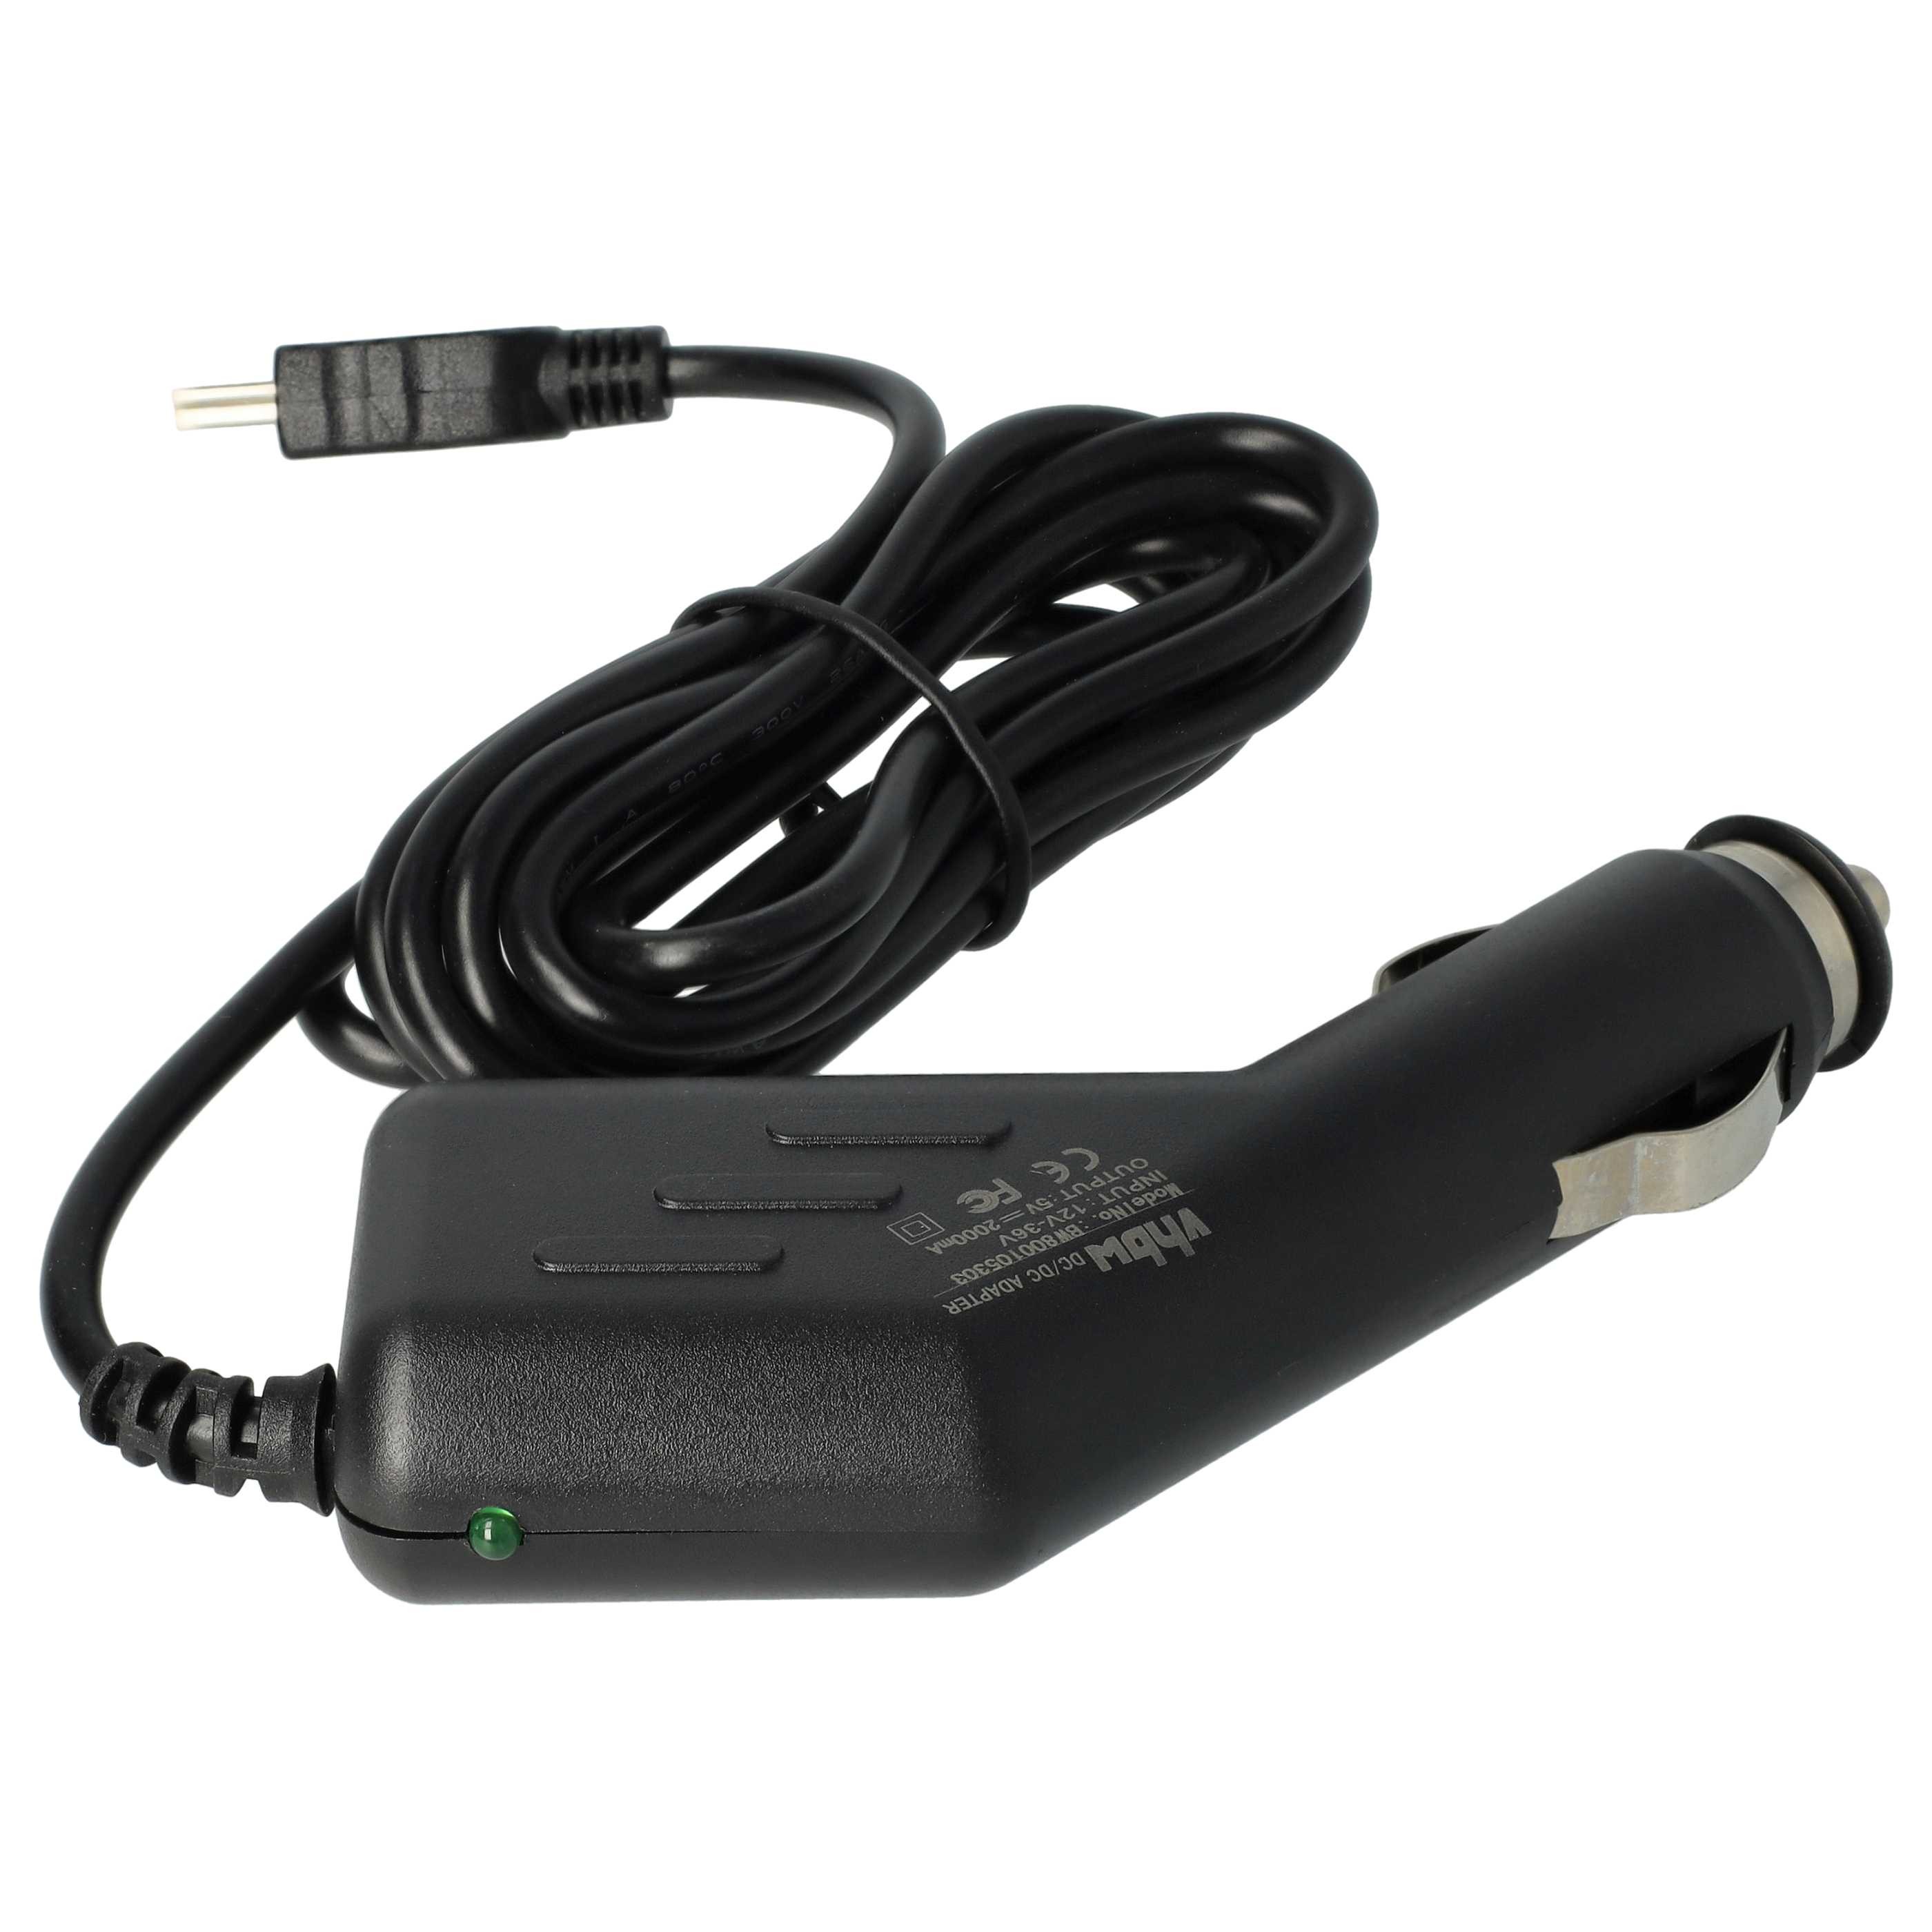 Chargeur voiture mini-USB 2,0 A pour GPS - allume-cigare